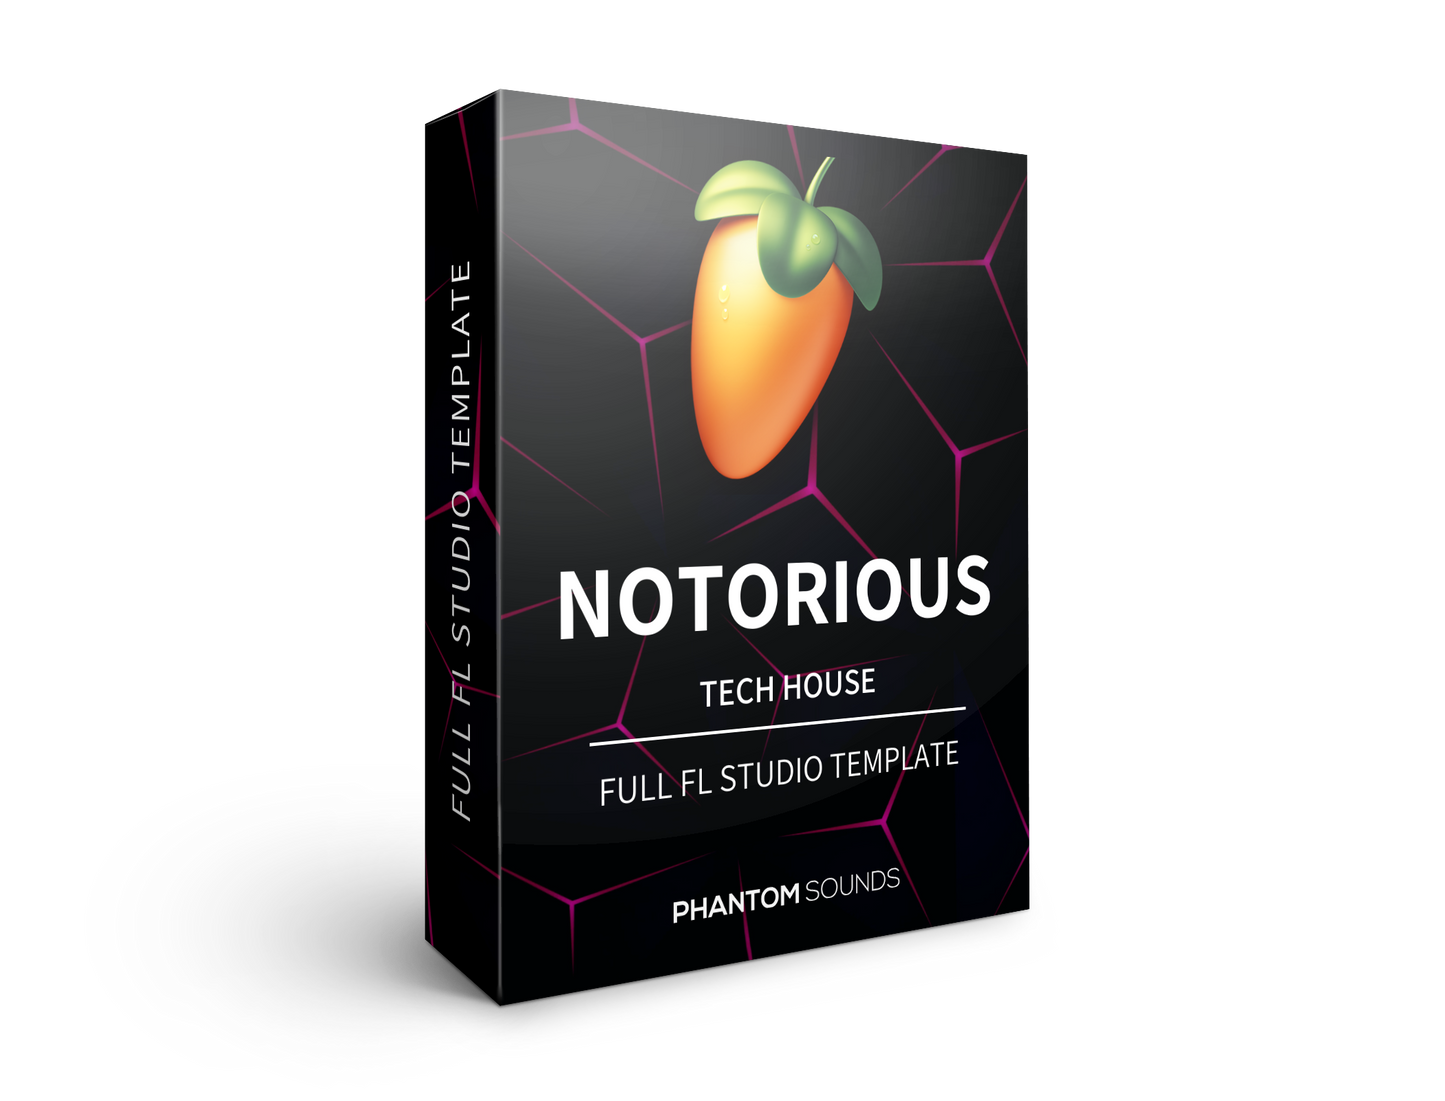 Notorious - Tech House FL Studio Template